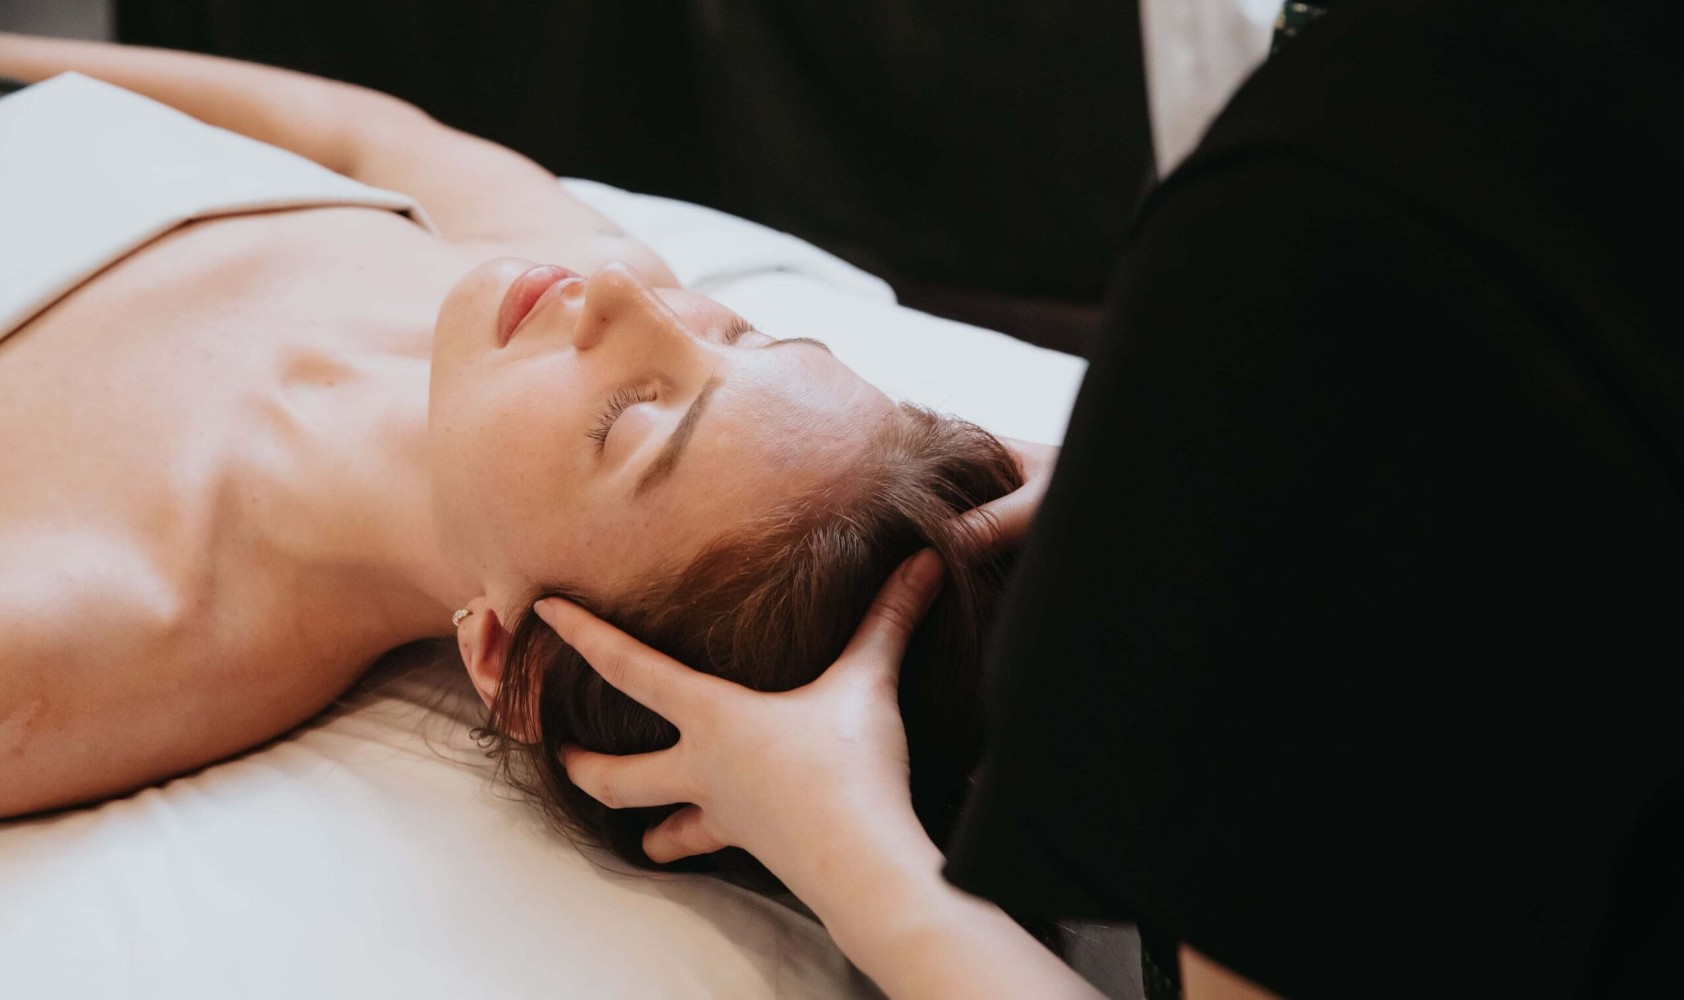 A young caucasian woman receiving a head massage